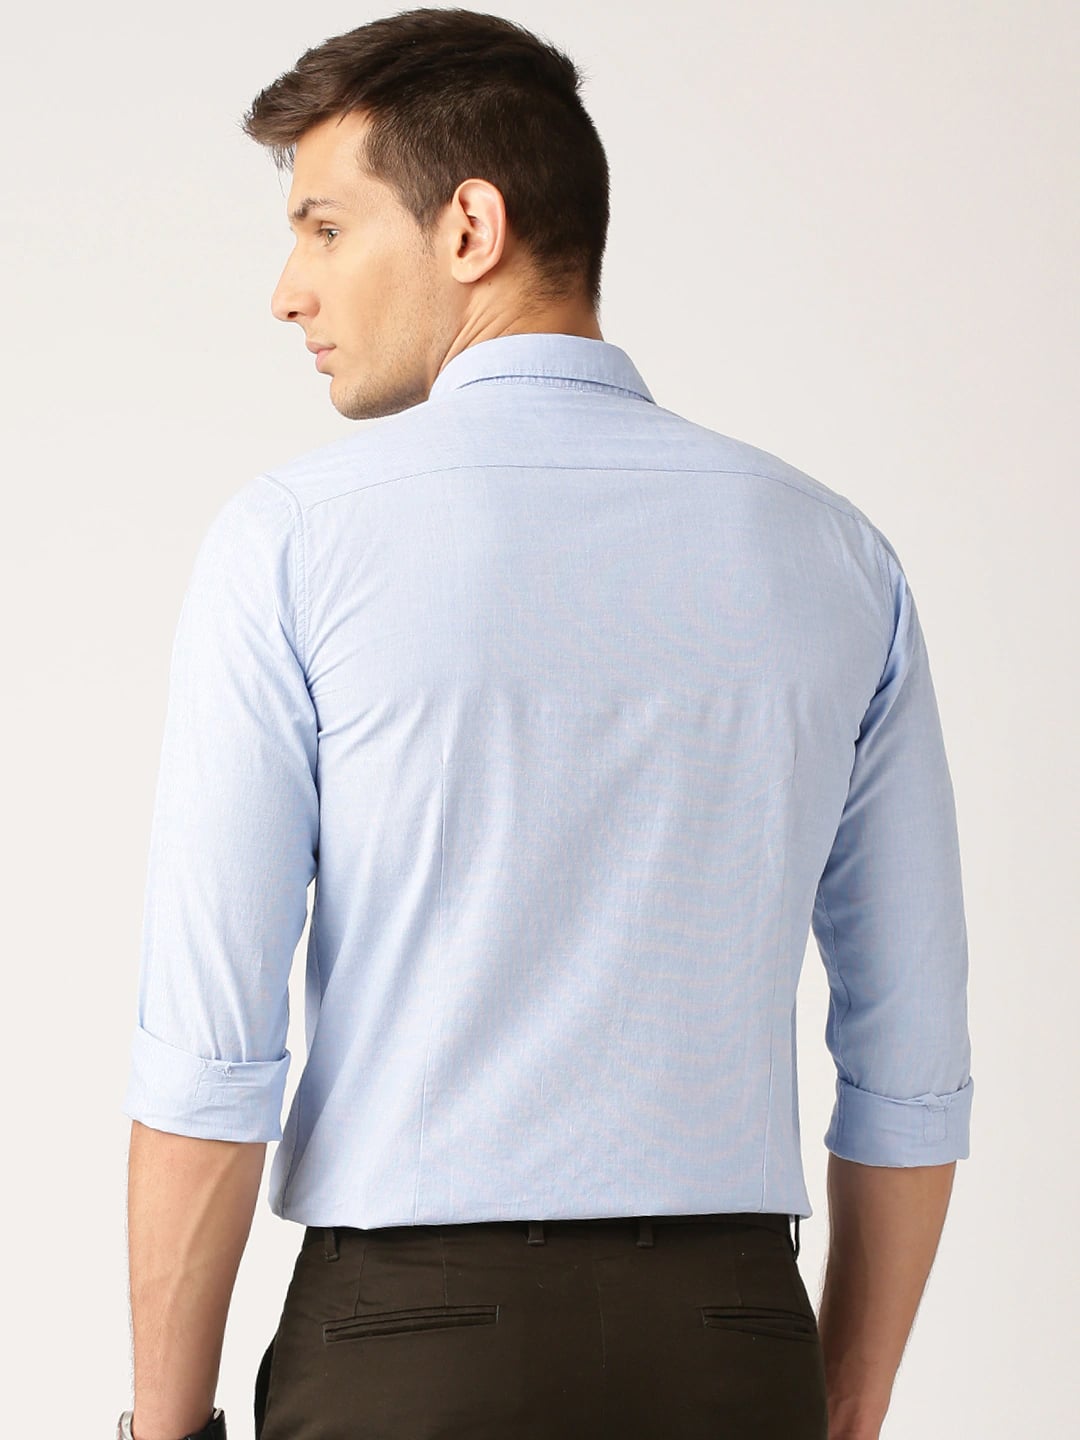 Men's Light Blue Formal Shirt